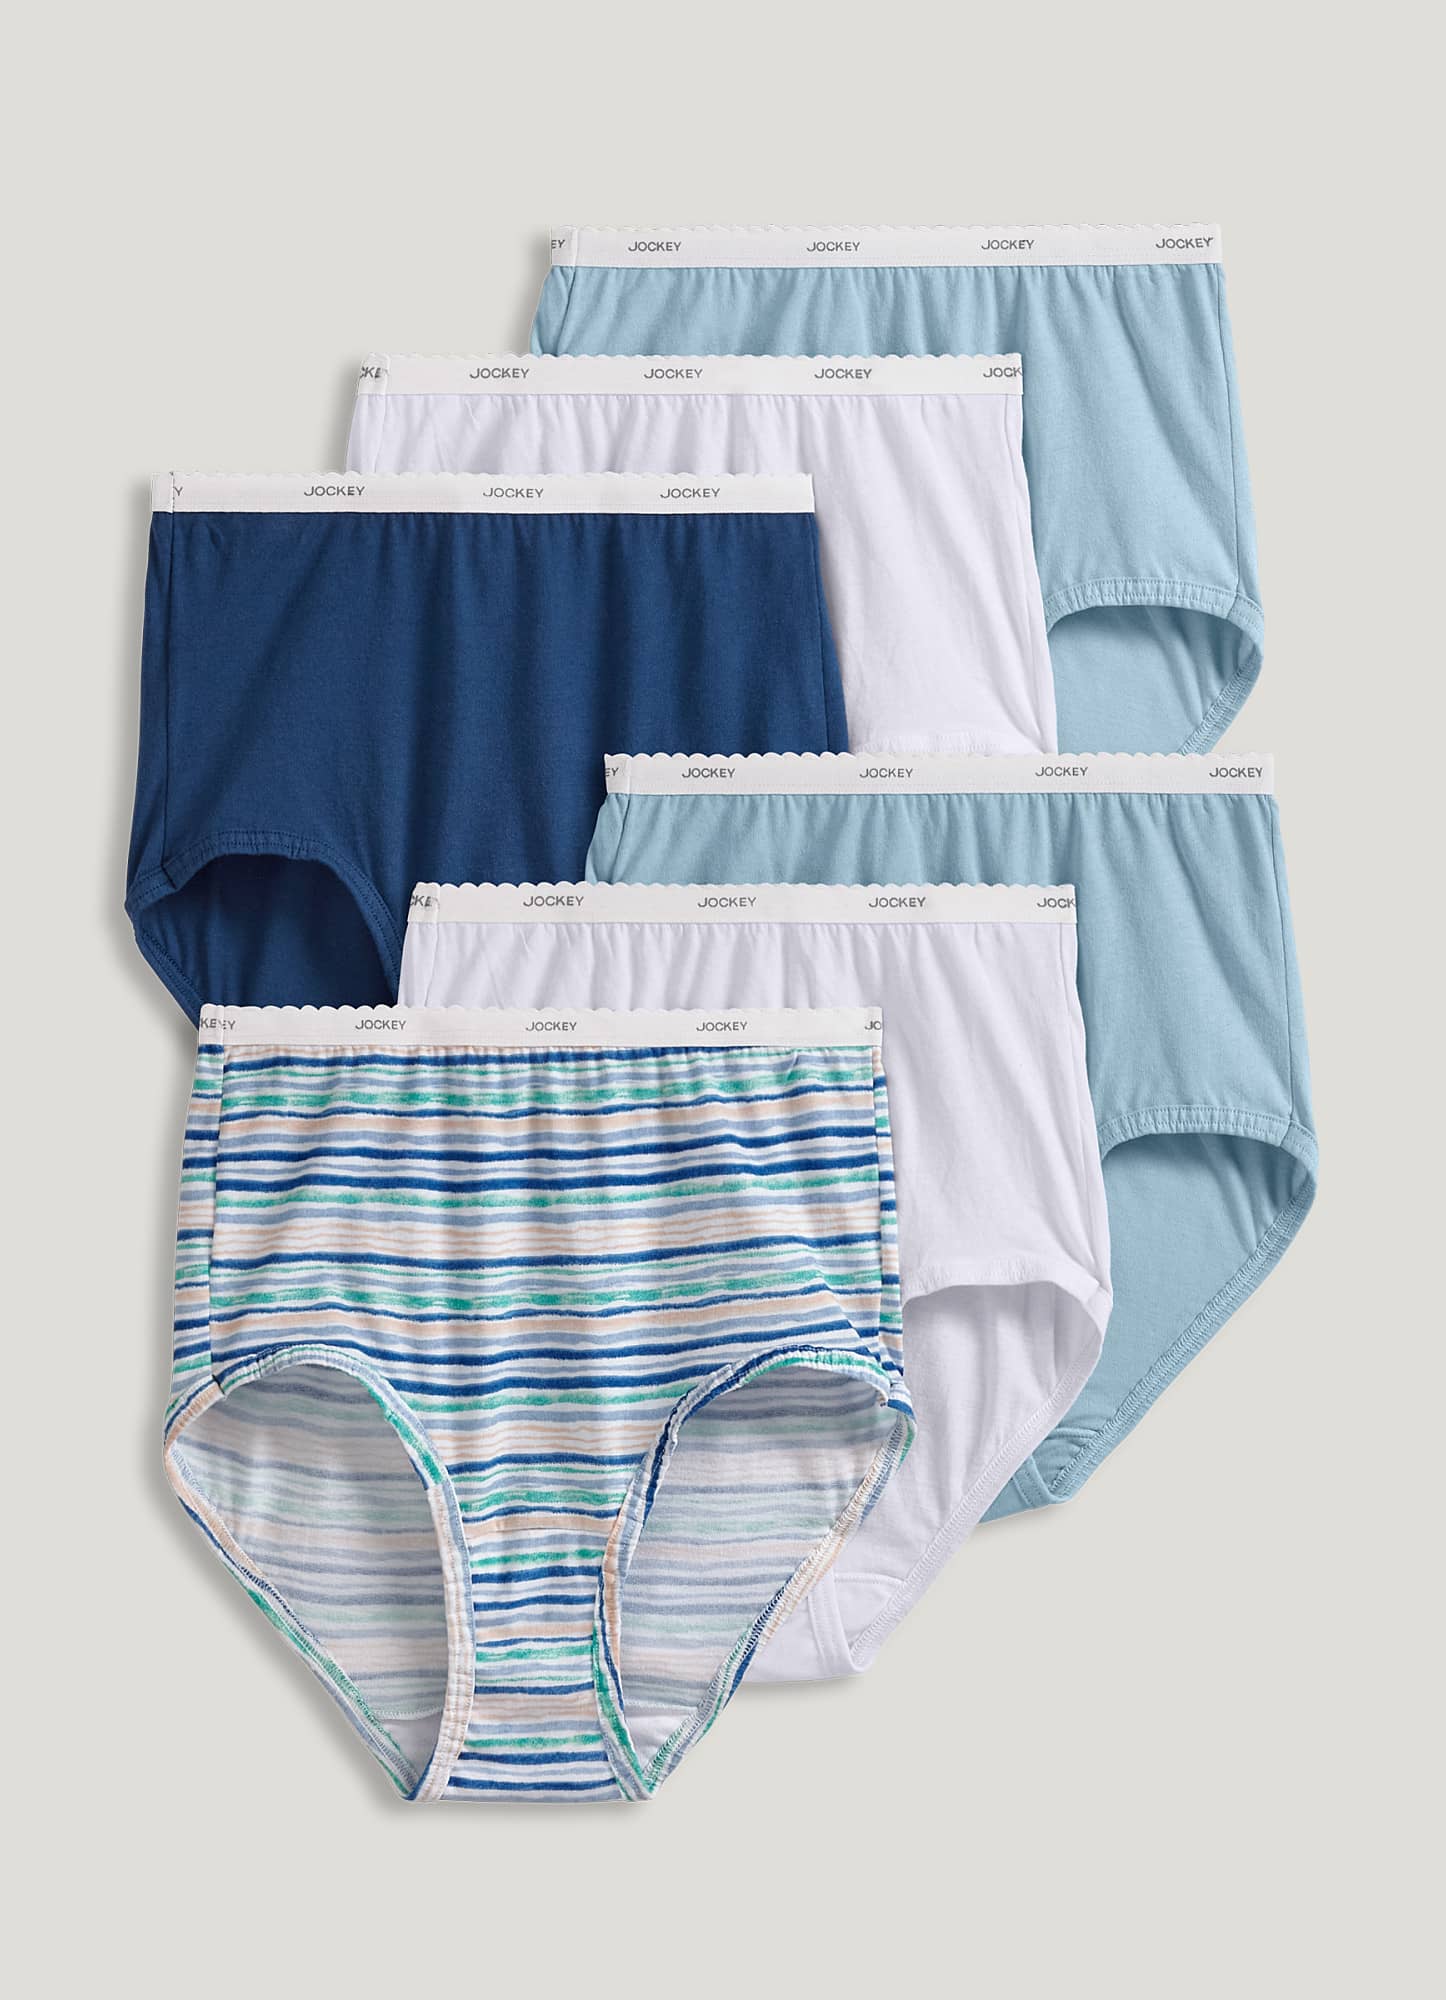 Jockey - Jockey Girls Underwear Bulk Buy-size 4-6 Years on Designer Wardrobe